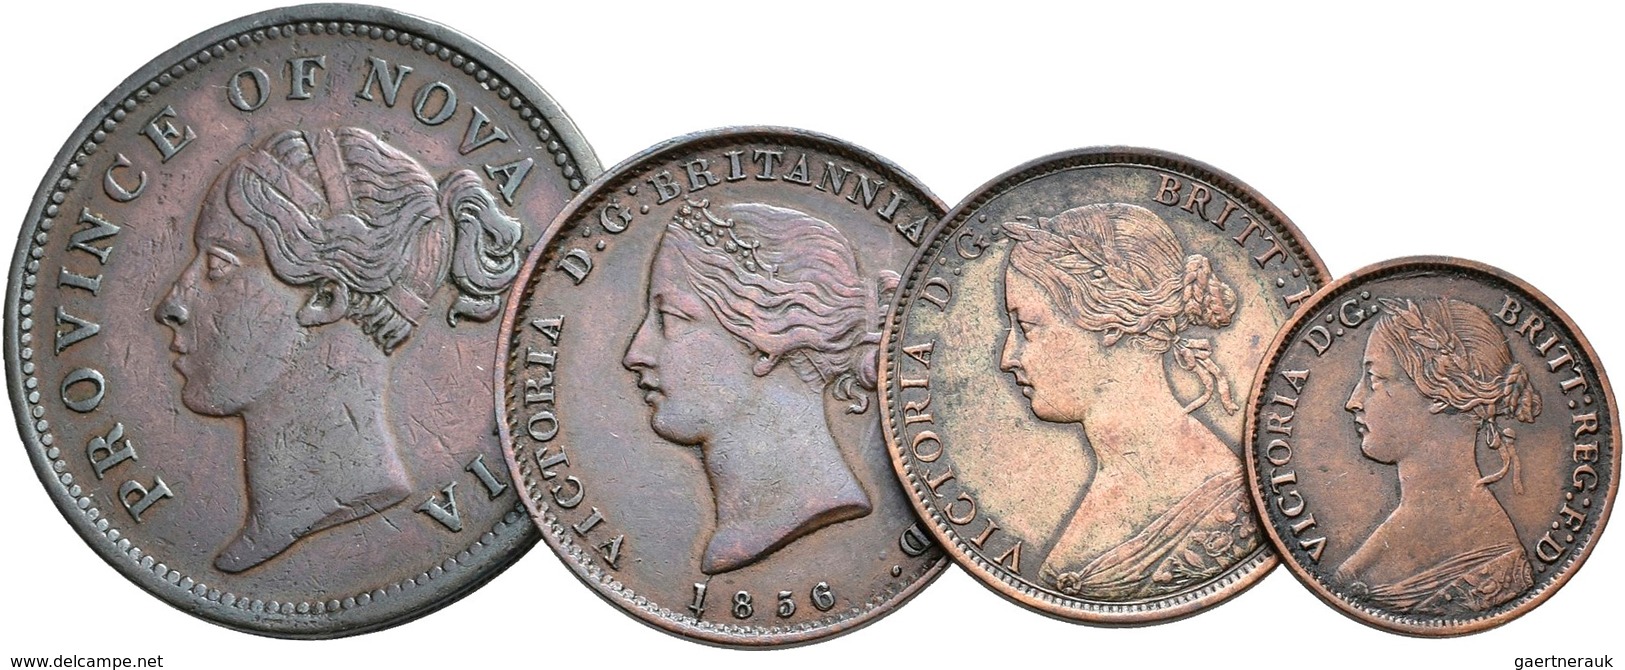 Kanada: Nova Scotia: Kleines Lot 4 Token Aus Nova Scotia 1840-1861. 2 X Half Penny Und 2 X 1 Penny. - Canada